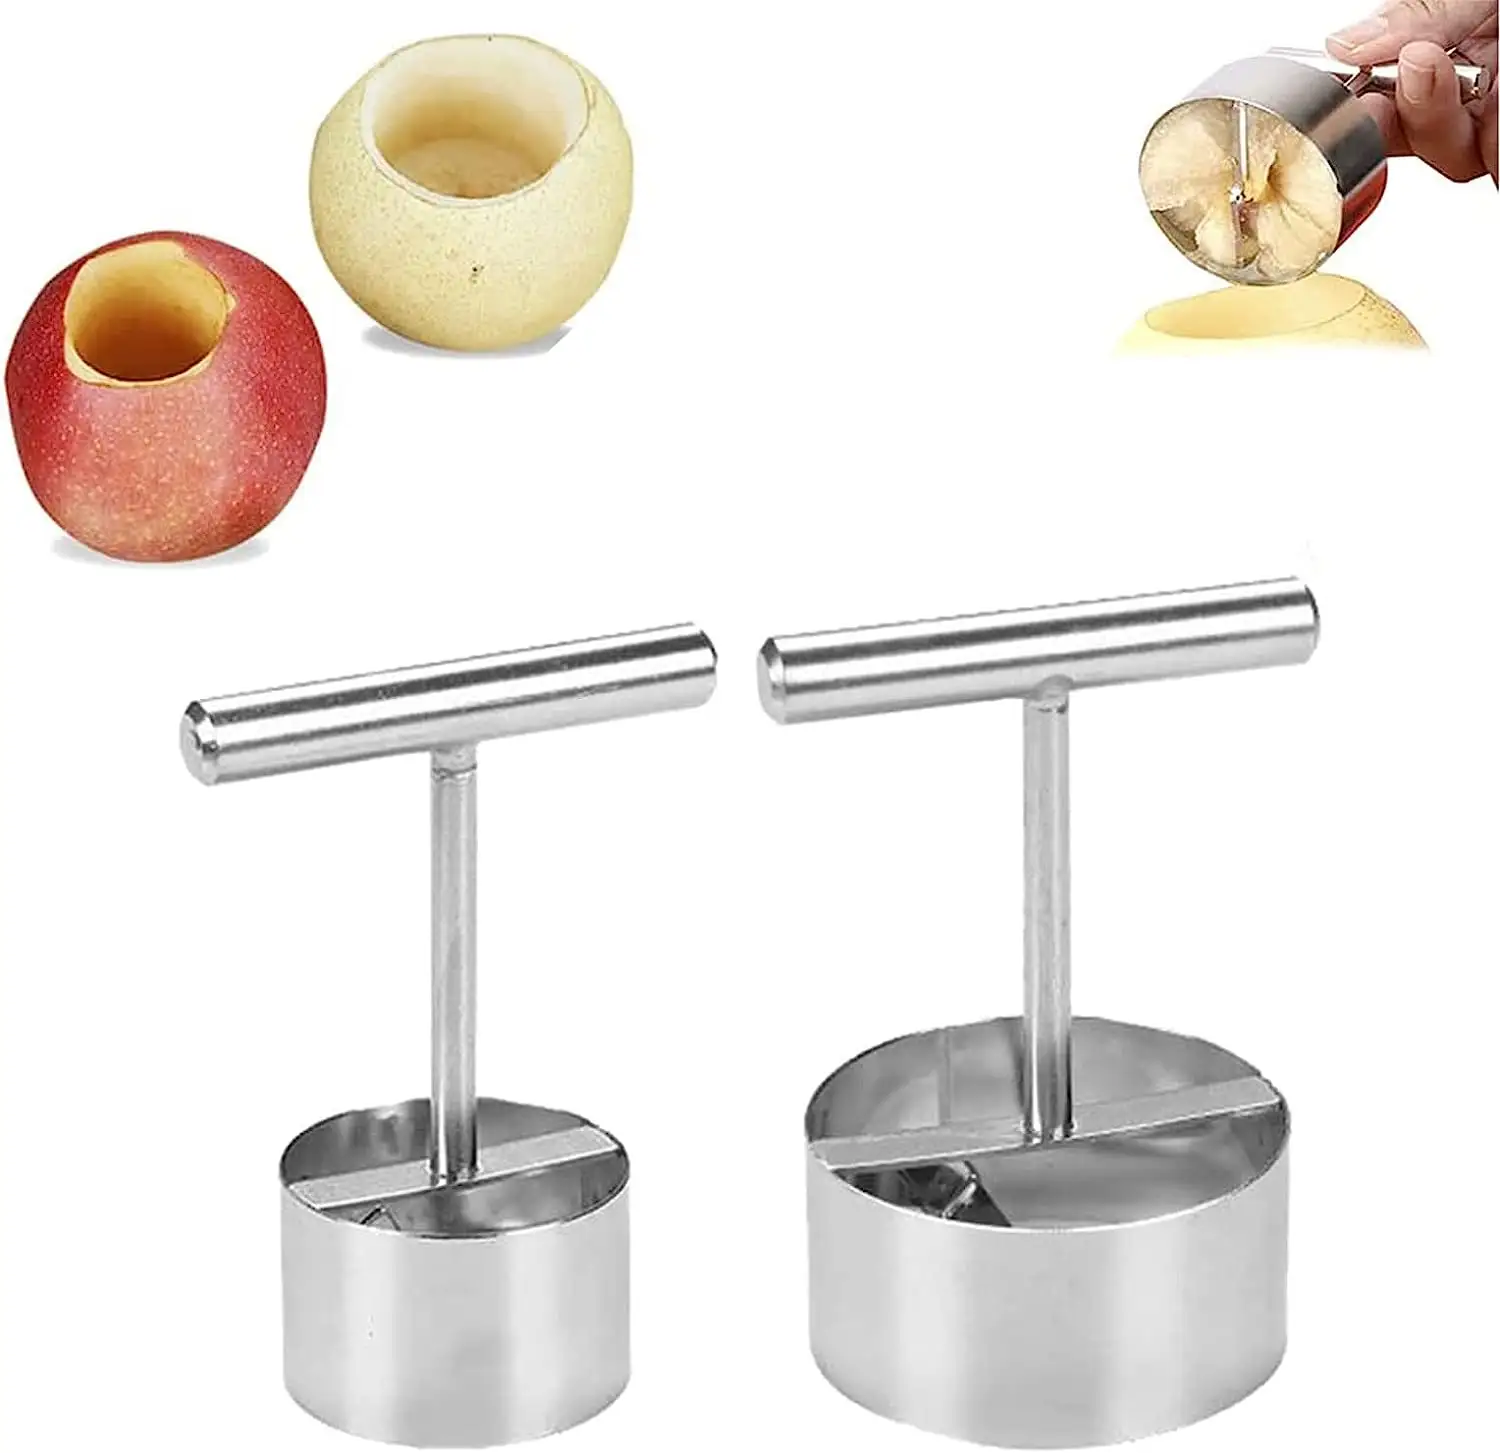 Apple Pear Corer Tool 304 Stainless Steel Multi-function Corer Separator Kitchen Tool Corer Remover for Apple Pear